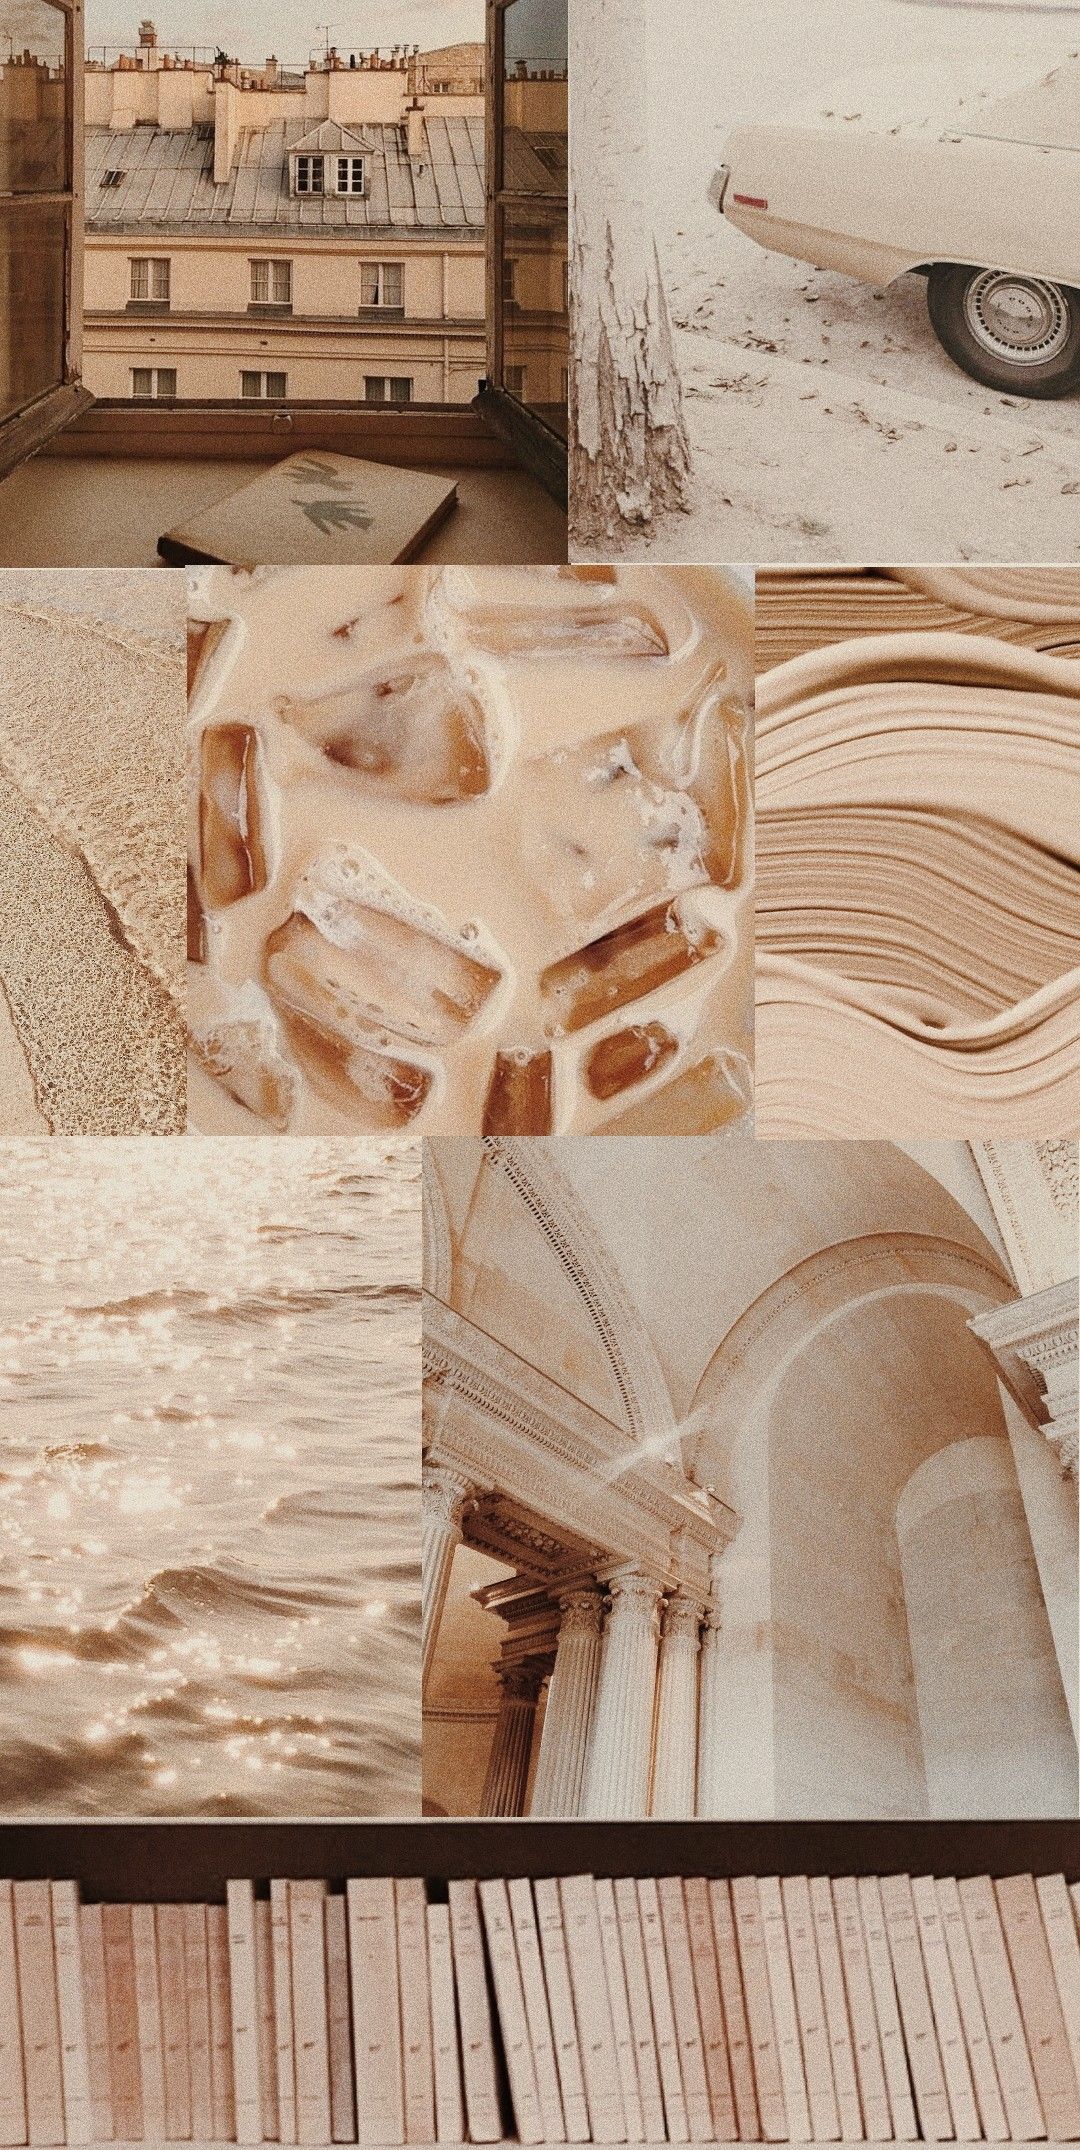 Aesthetic Collage, beige, brown, tan, white, marble, architecture, sand, beach, car - Beige, cream